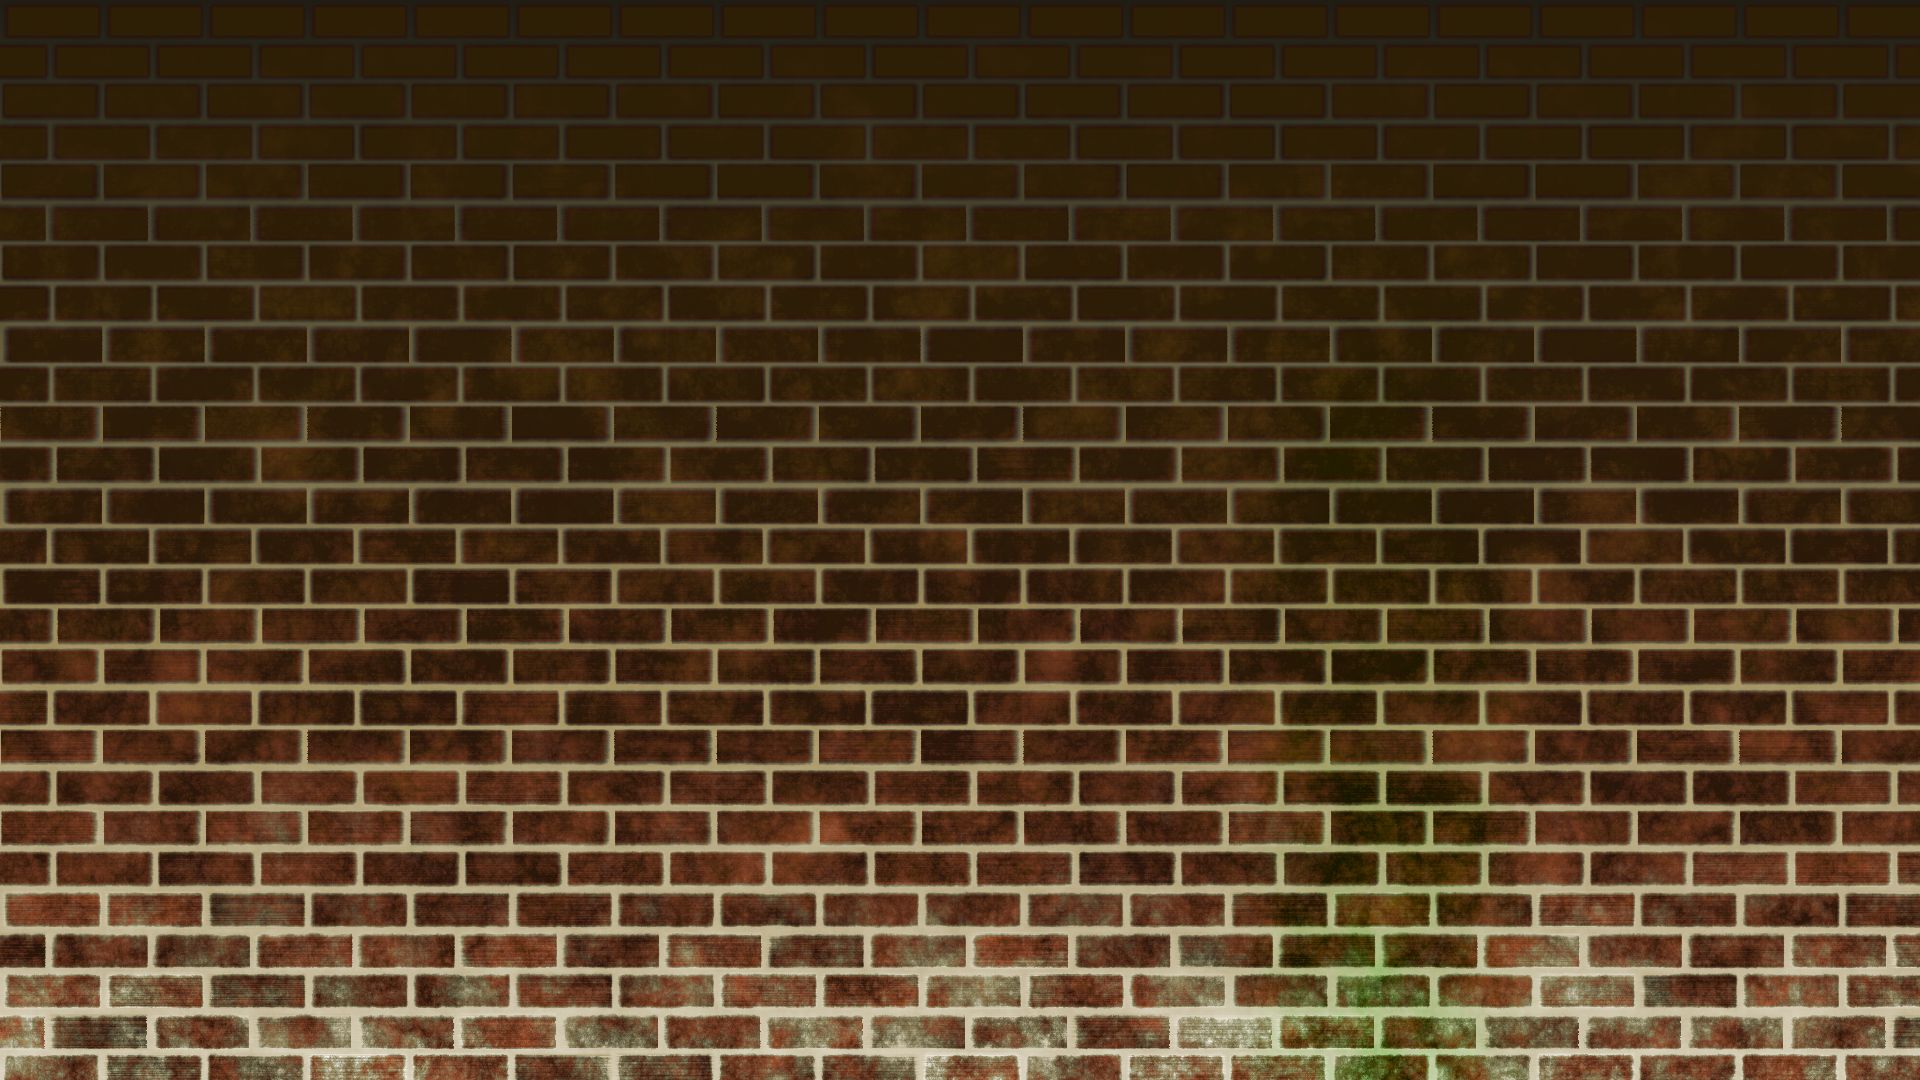 Bricks Red Brick Nvidia Looks Wallpaper Jpg